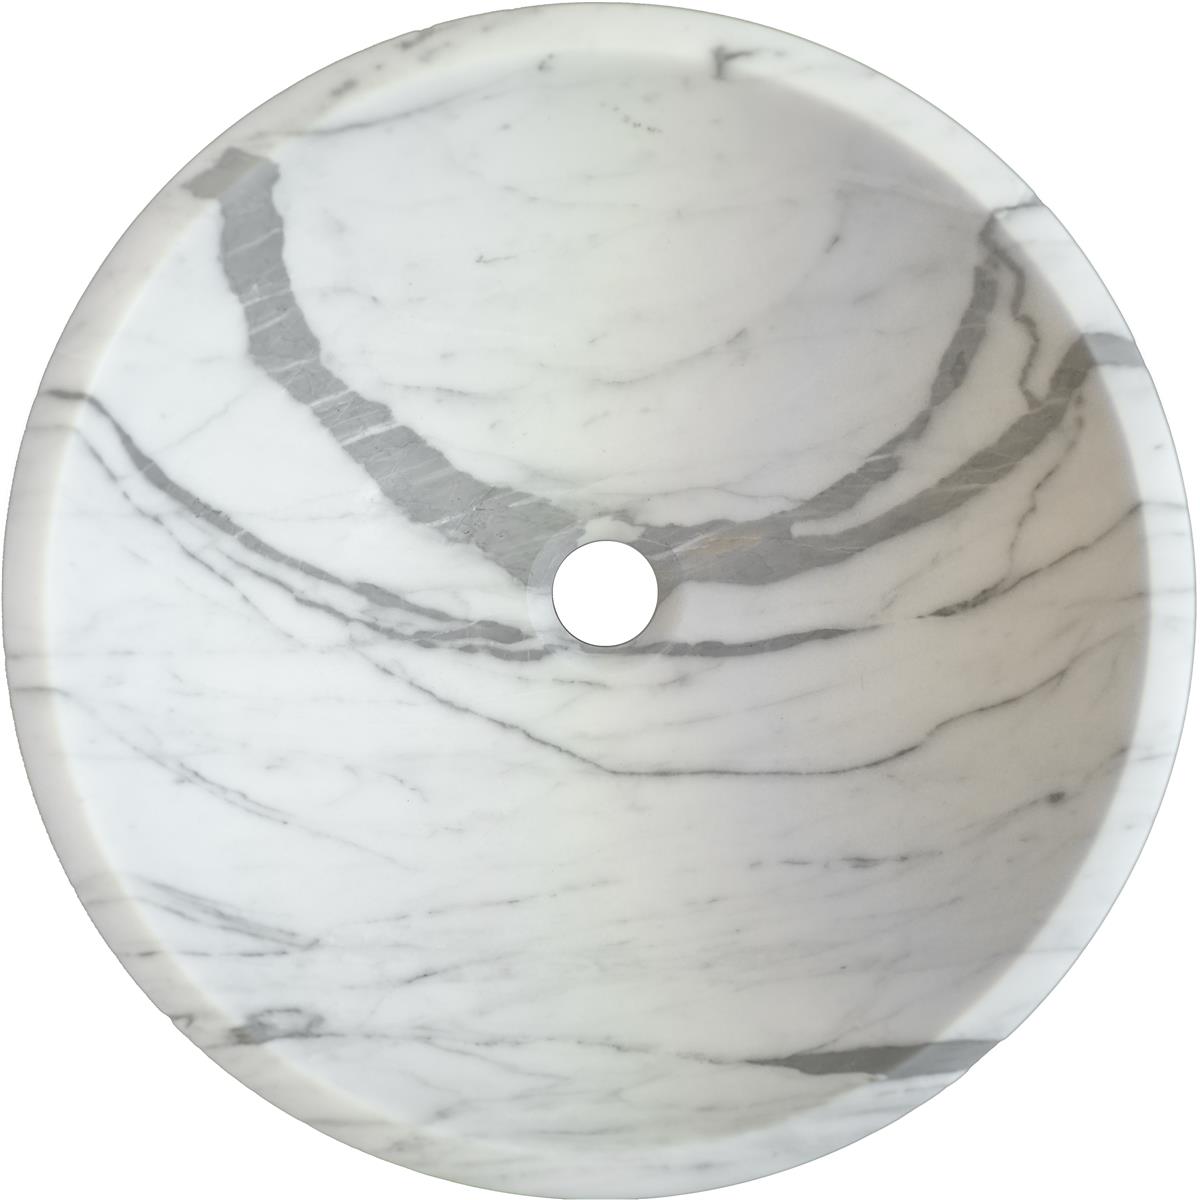 Carrara marmorservant 42x14,5 cm